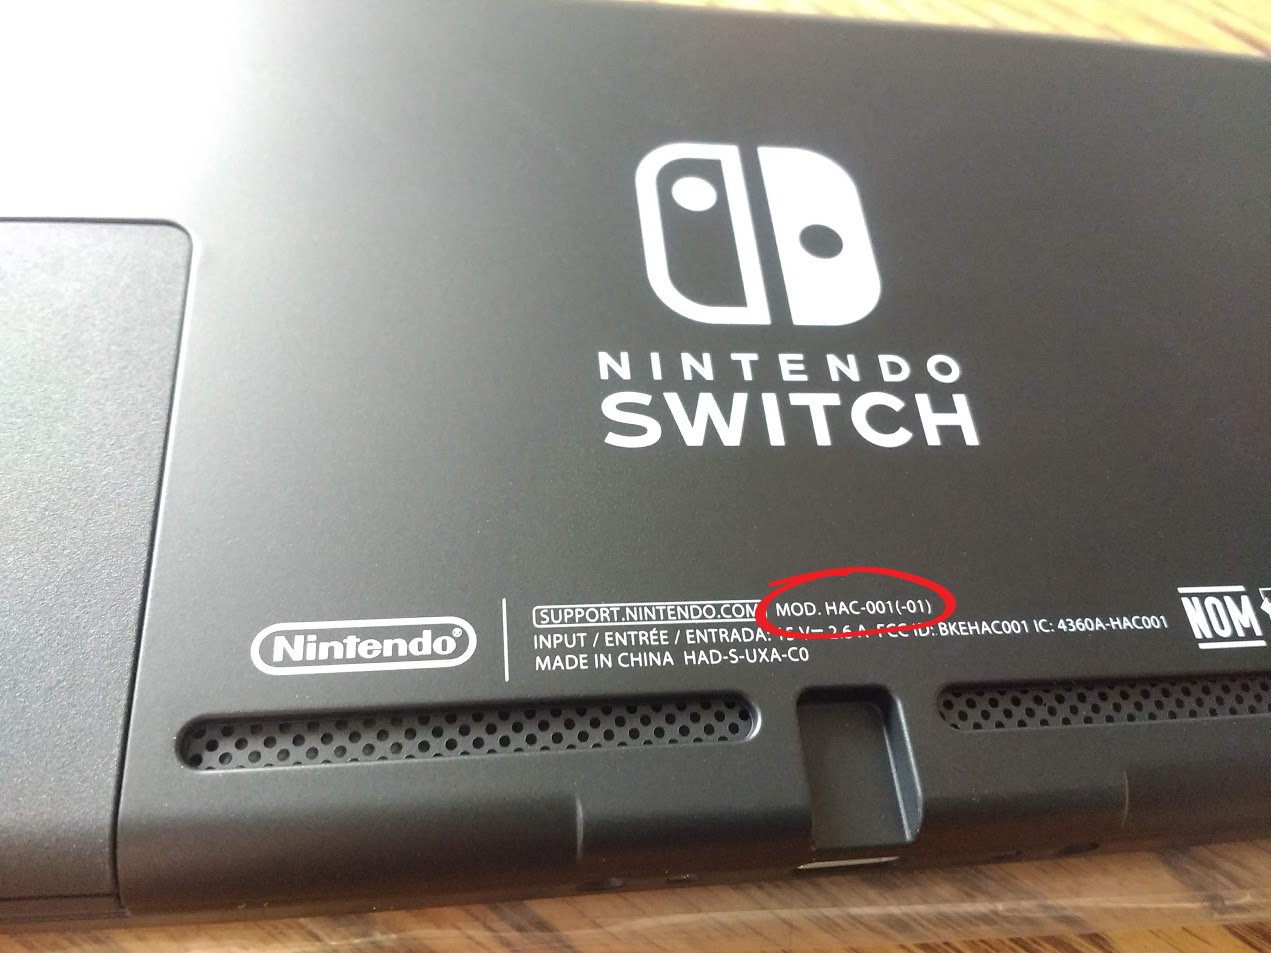 Nintendo switch old. Нинтендо свитч 2. Nintendo Switch 1 и 2 ревизия. Нинтендо свитч 2 ревизия. Нинтендо свитч серийник xkj700.